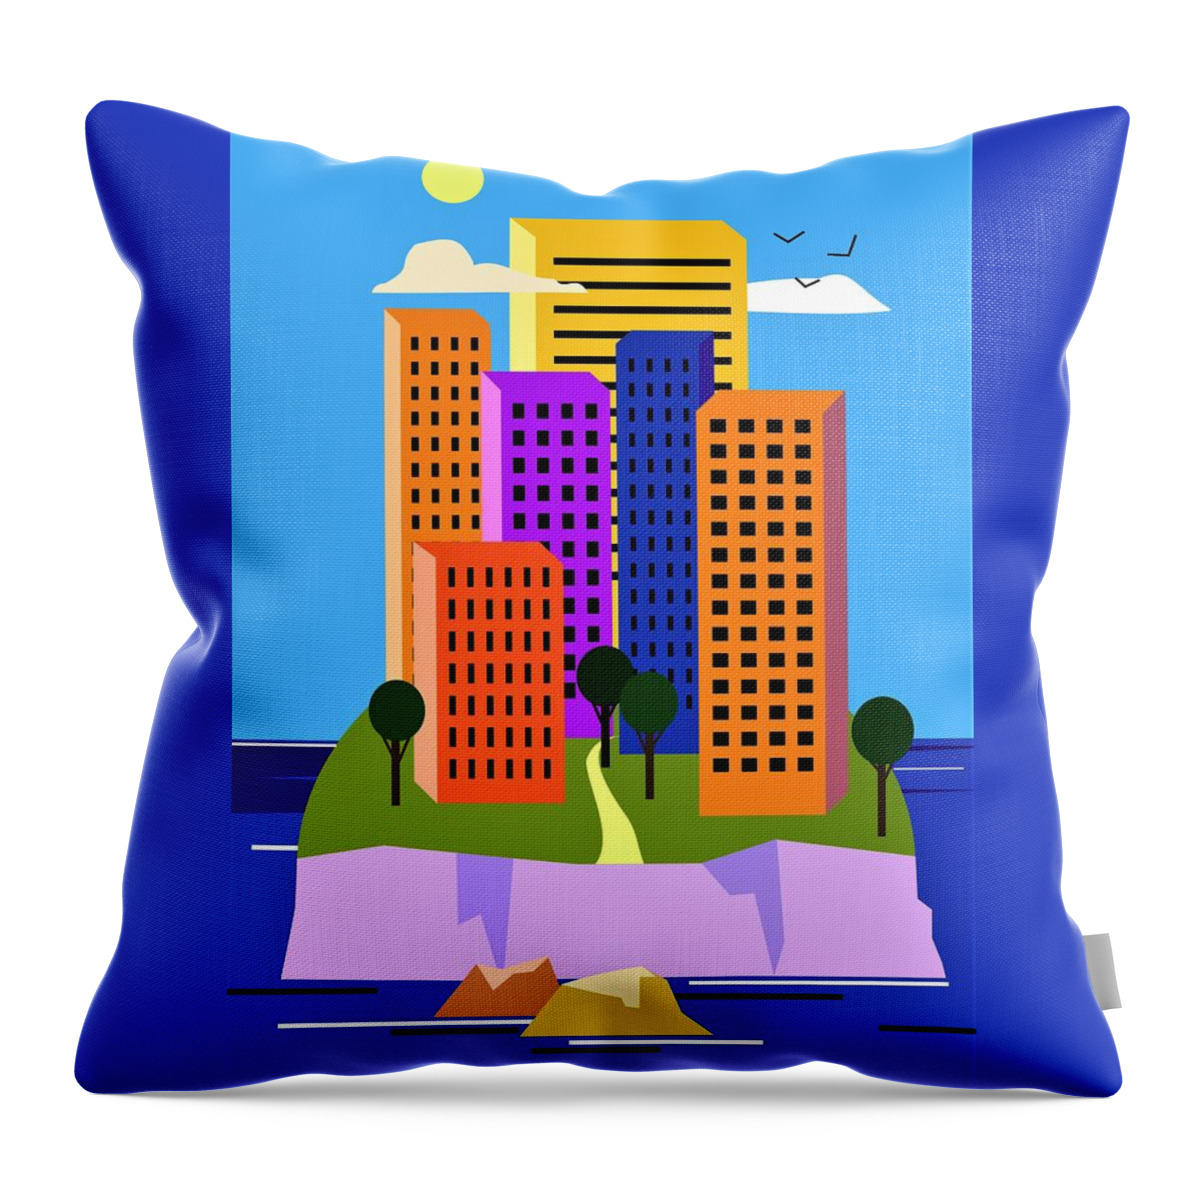 Island Throw Pillow featuring the digital art Island City by Fatline Graphic Art